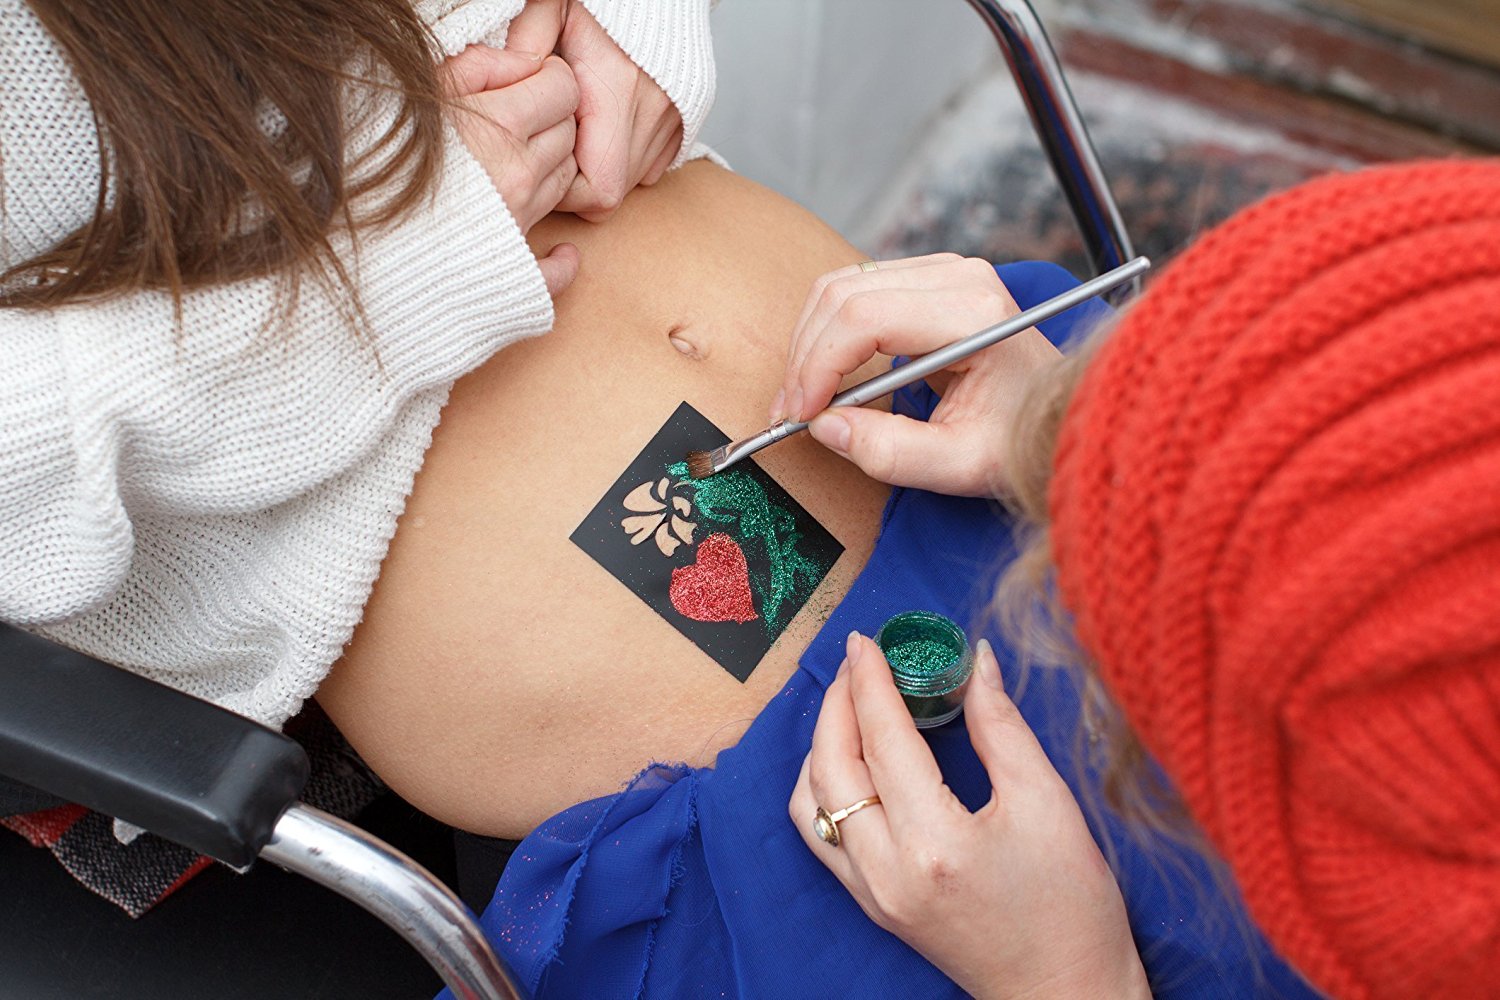 Tattoo Stencil +100 Self-adhesive Temporary Tattoo Templates for Henna / Airbrush